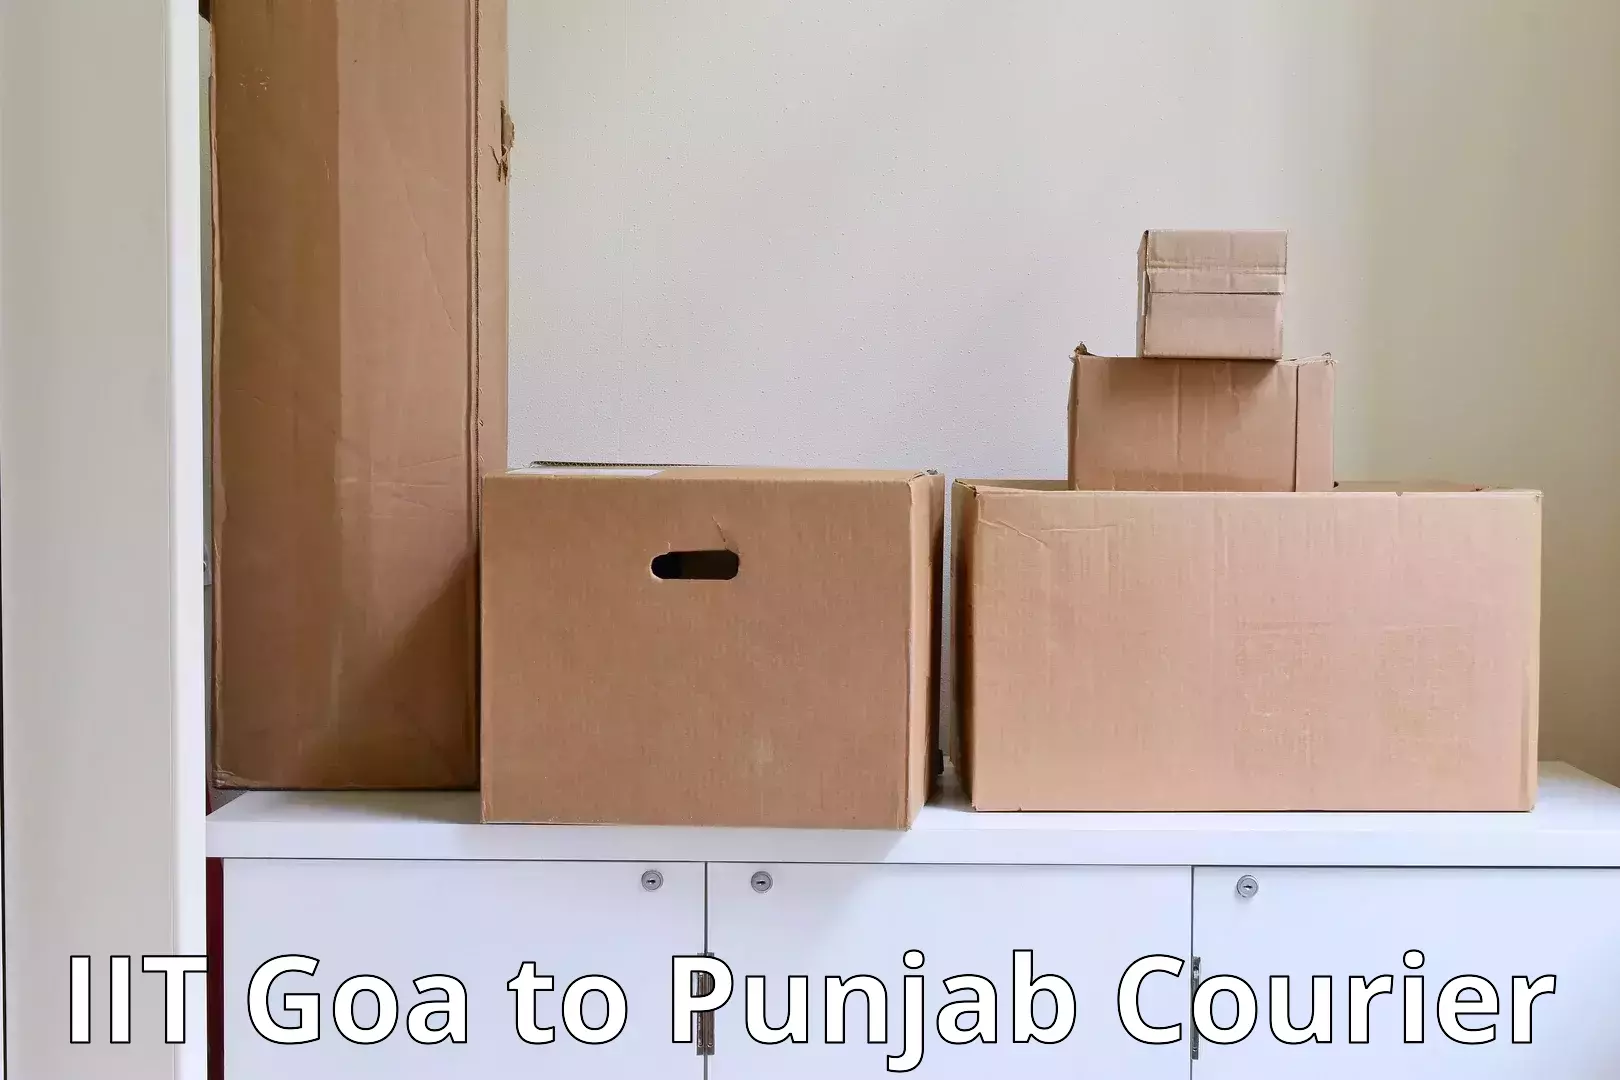 Efficient moving company IIT Goa to Punjab